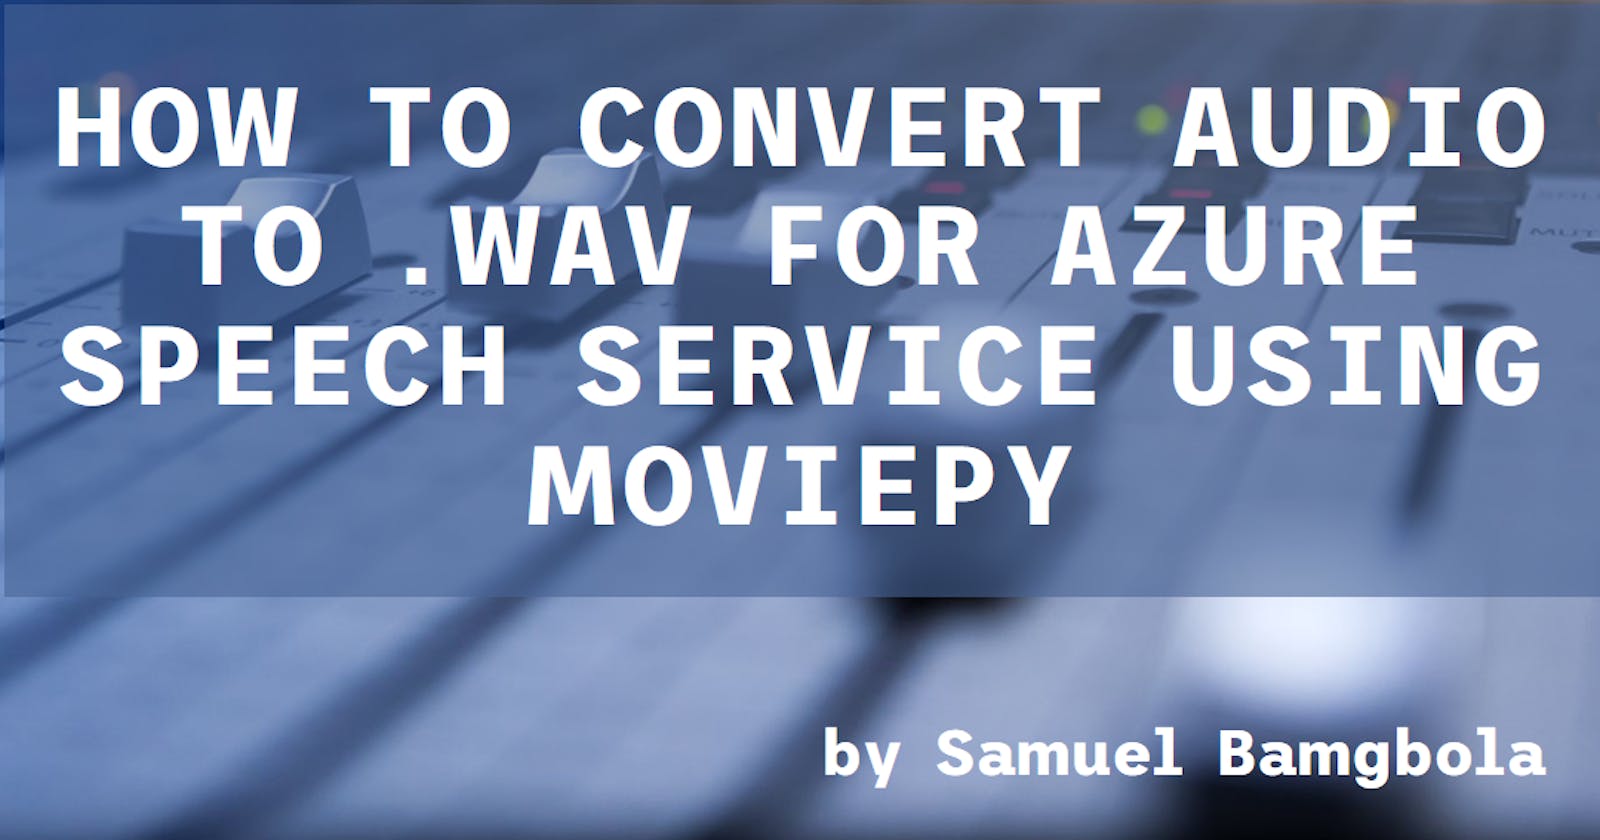 How to Convert Audio to .WAV for Azure Speech Service Using MoviePy